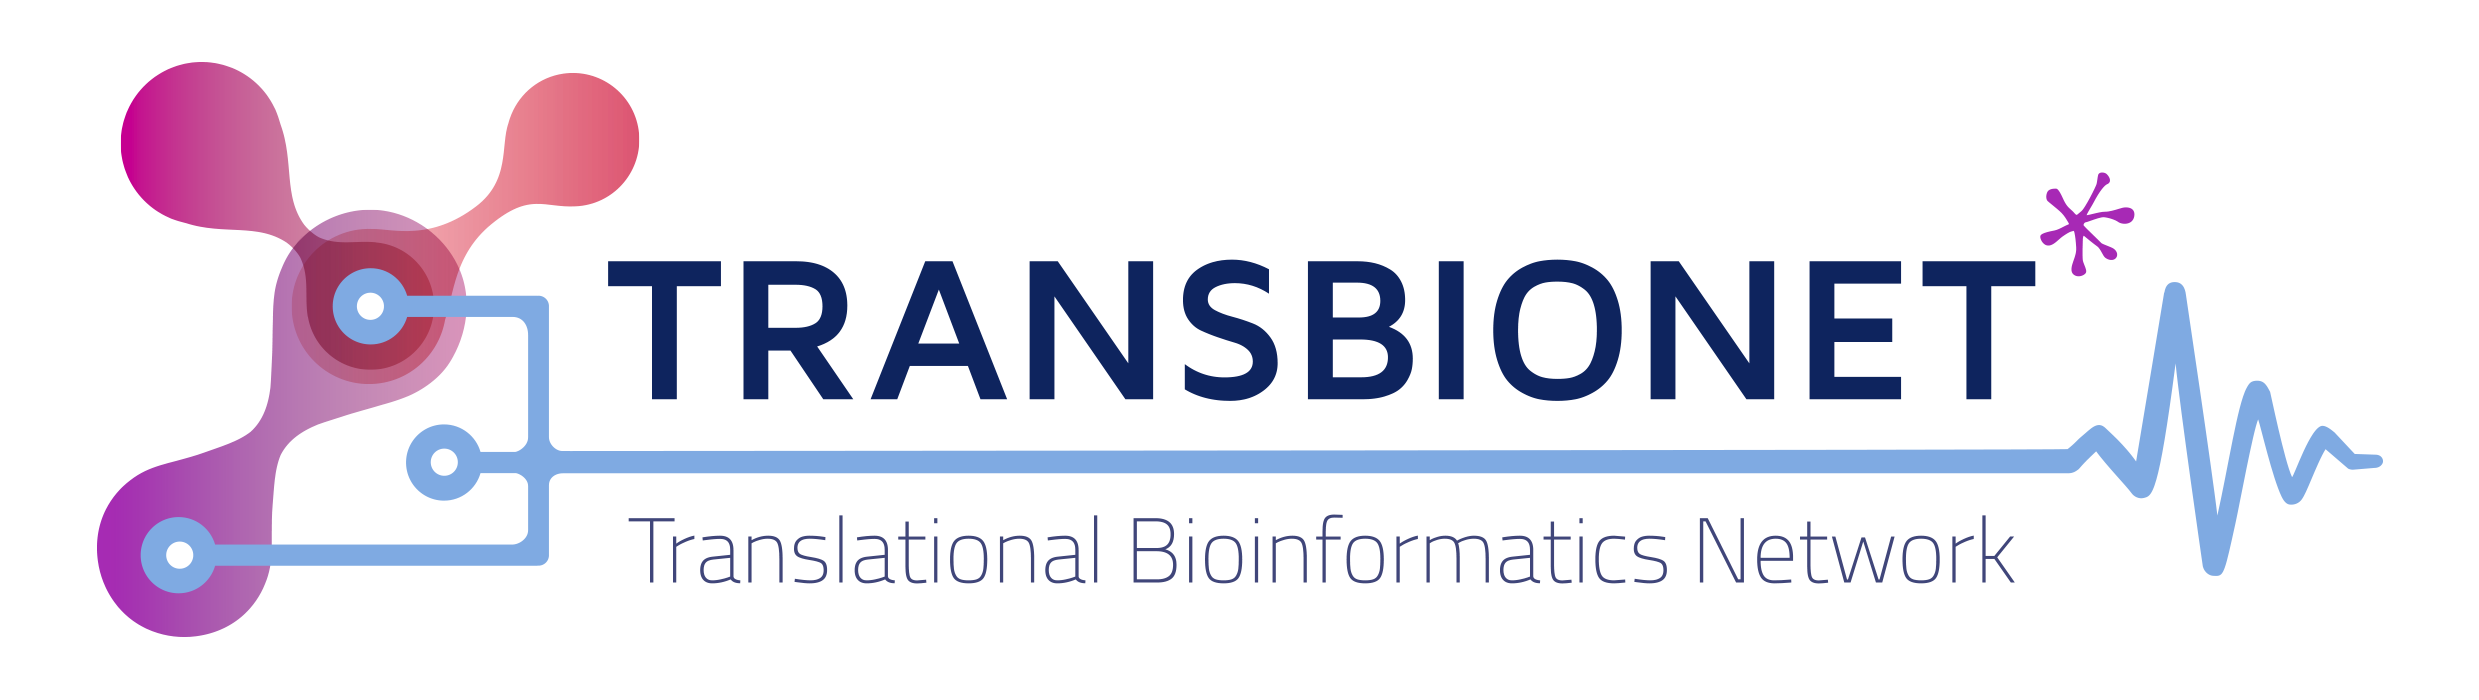 TransBioNet horitzontal logo